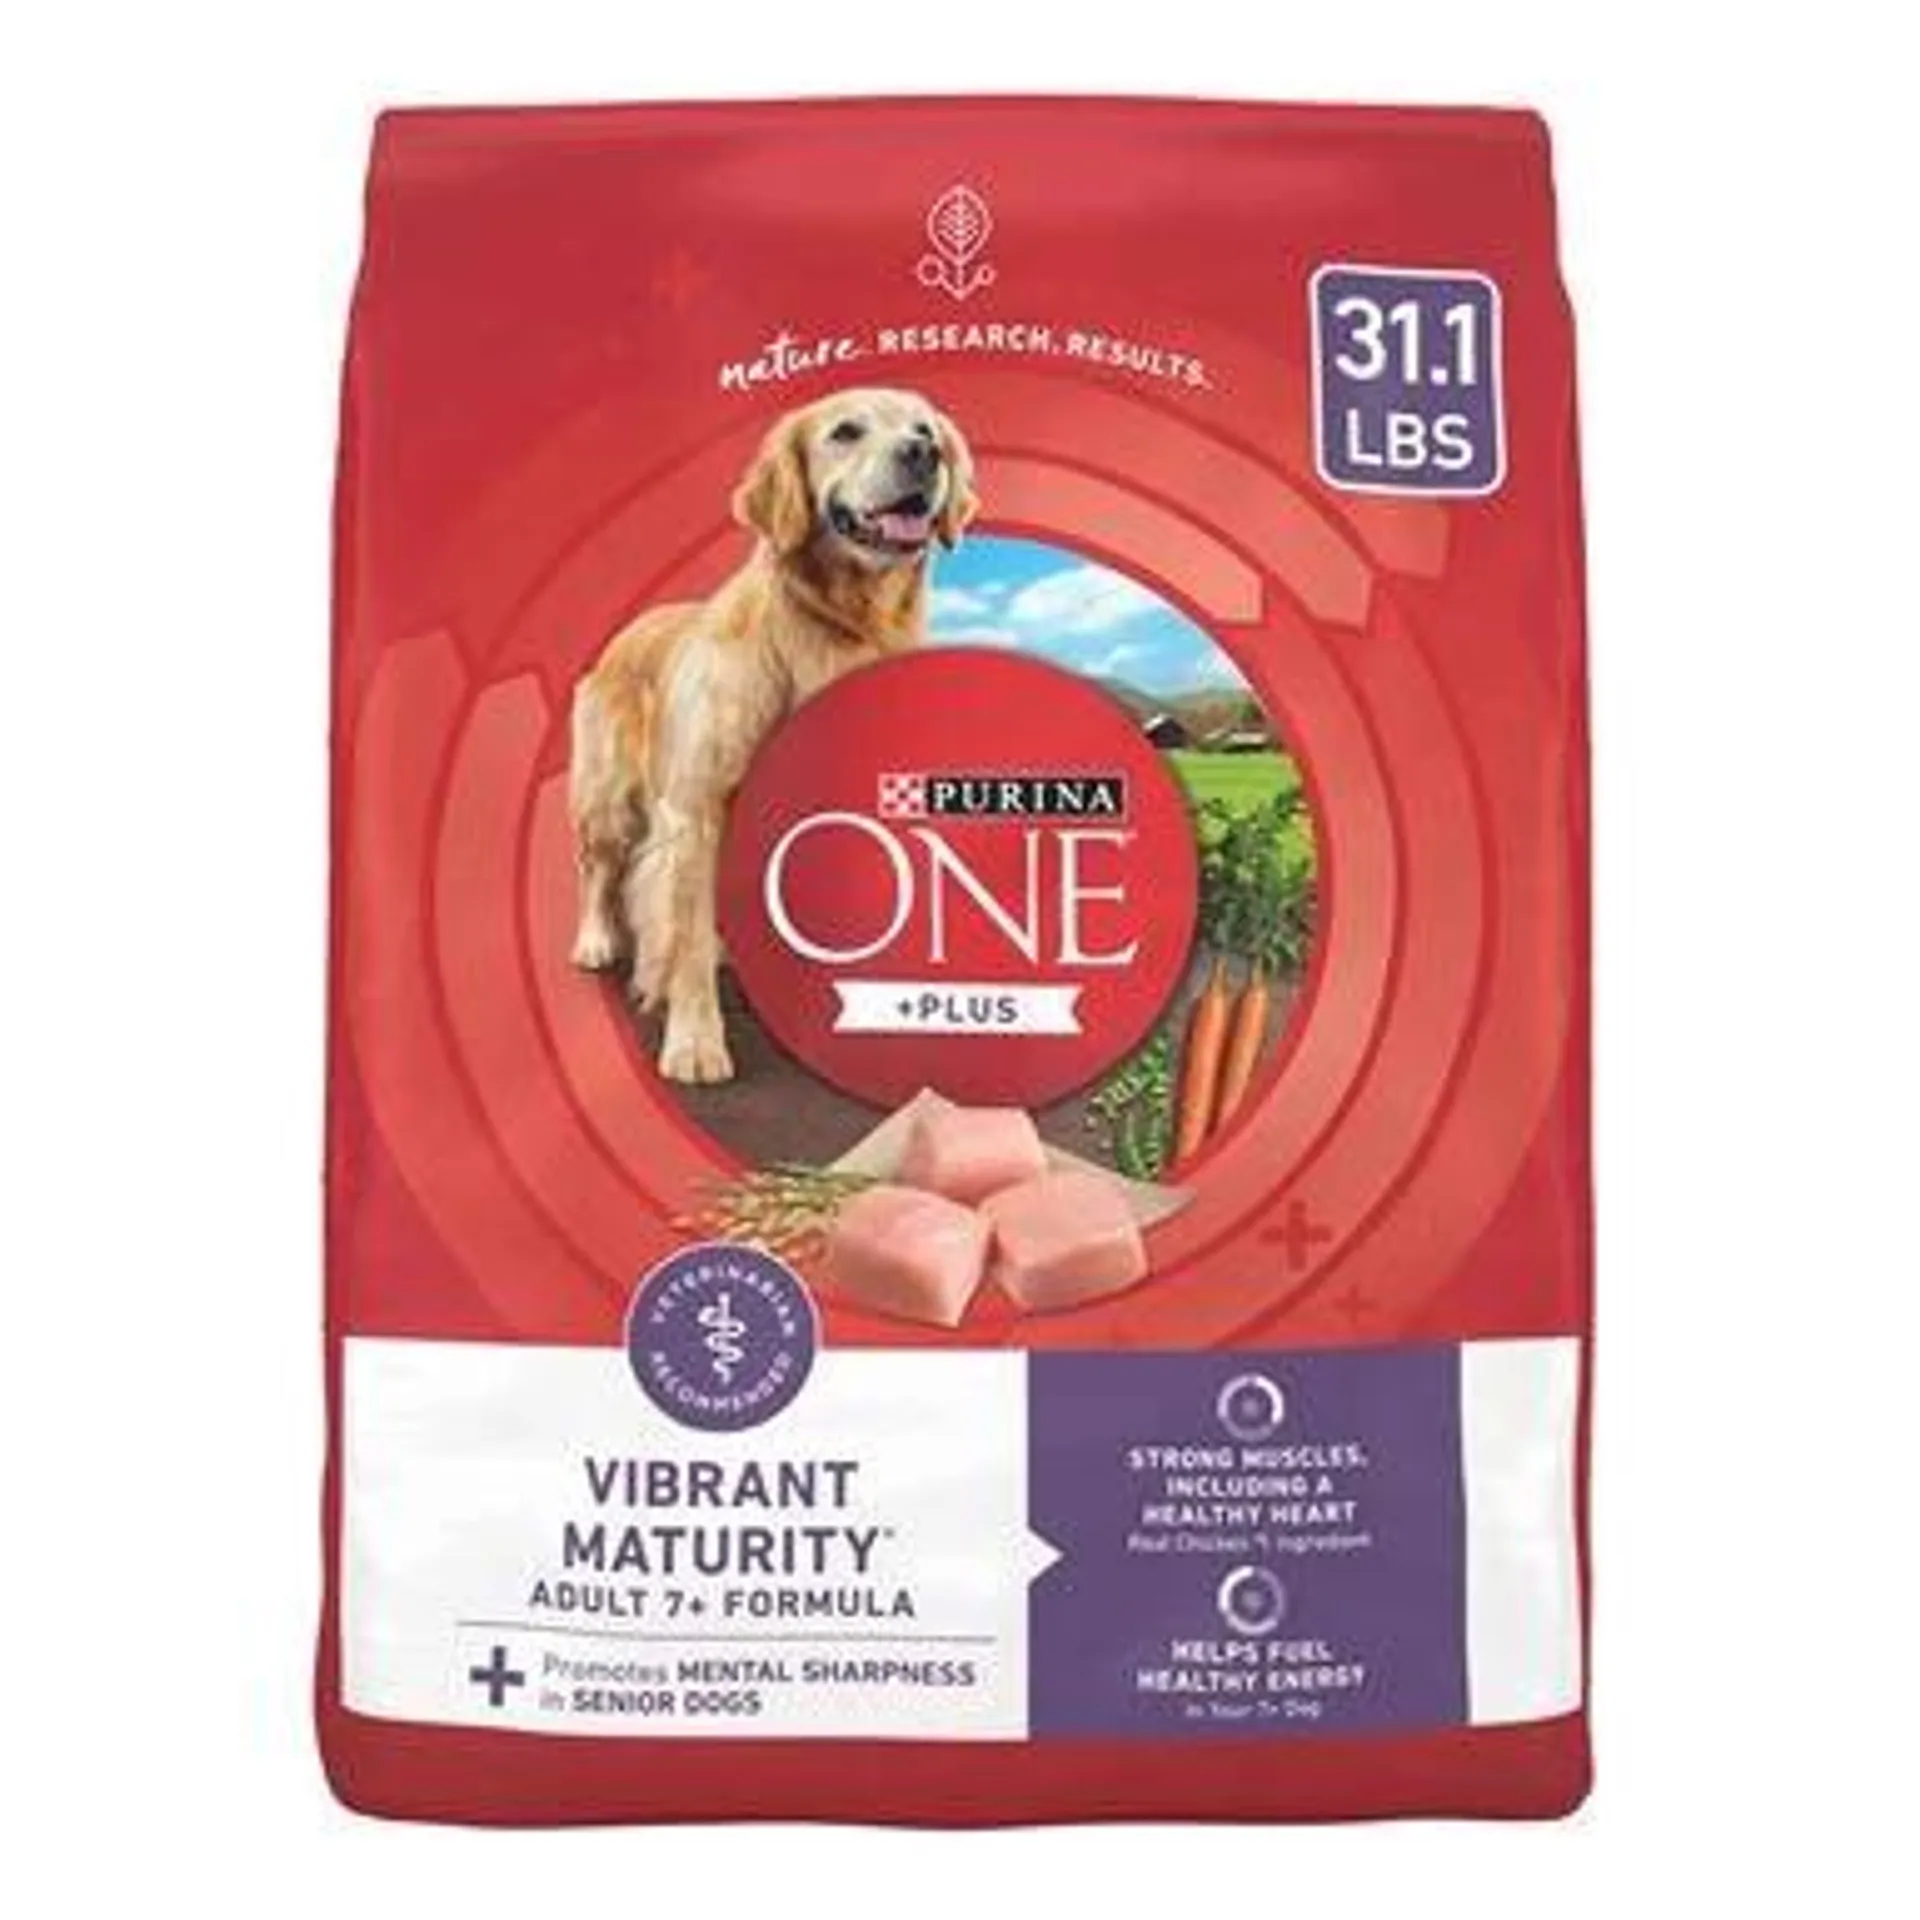 Purina ONE High Protein Dry Senior Dog Food Plus Vibrant Maturity Adult 7 Plus Formula - 31.1 Pound Bag